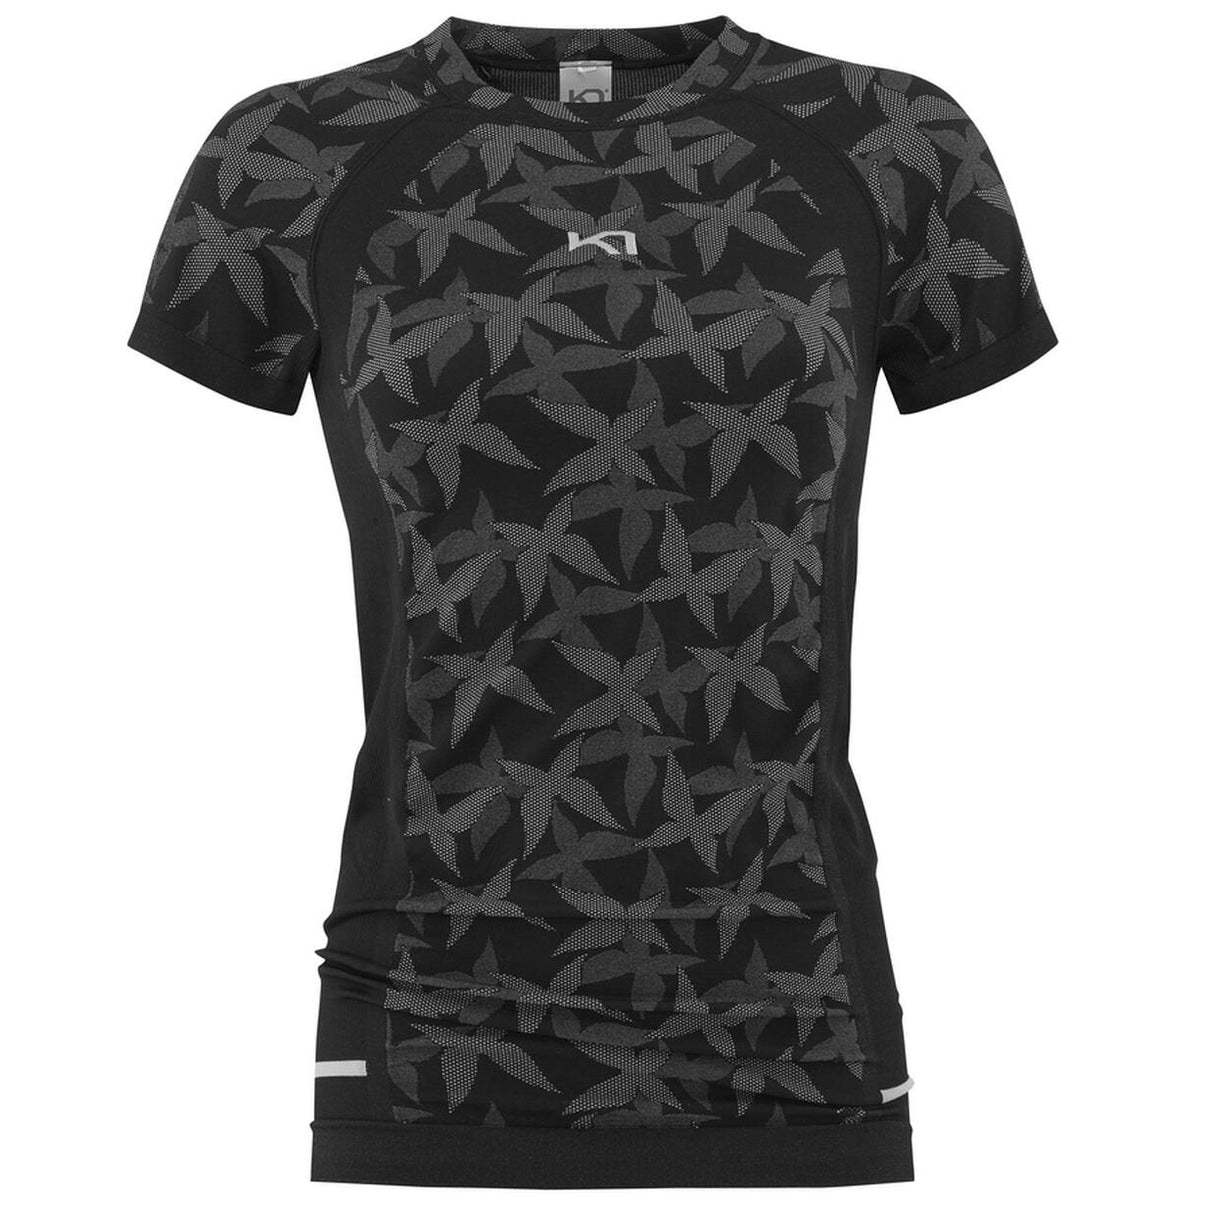 Kari Traa 2022 Women's Butterfly Tee Shirt